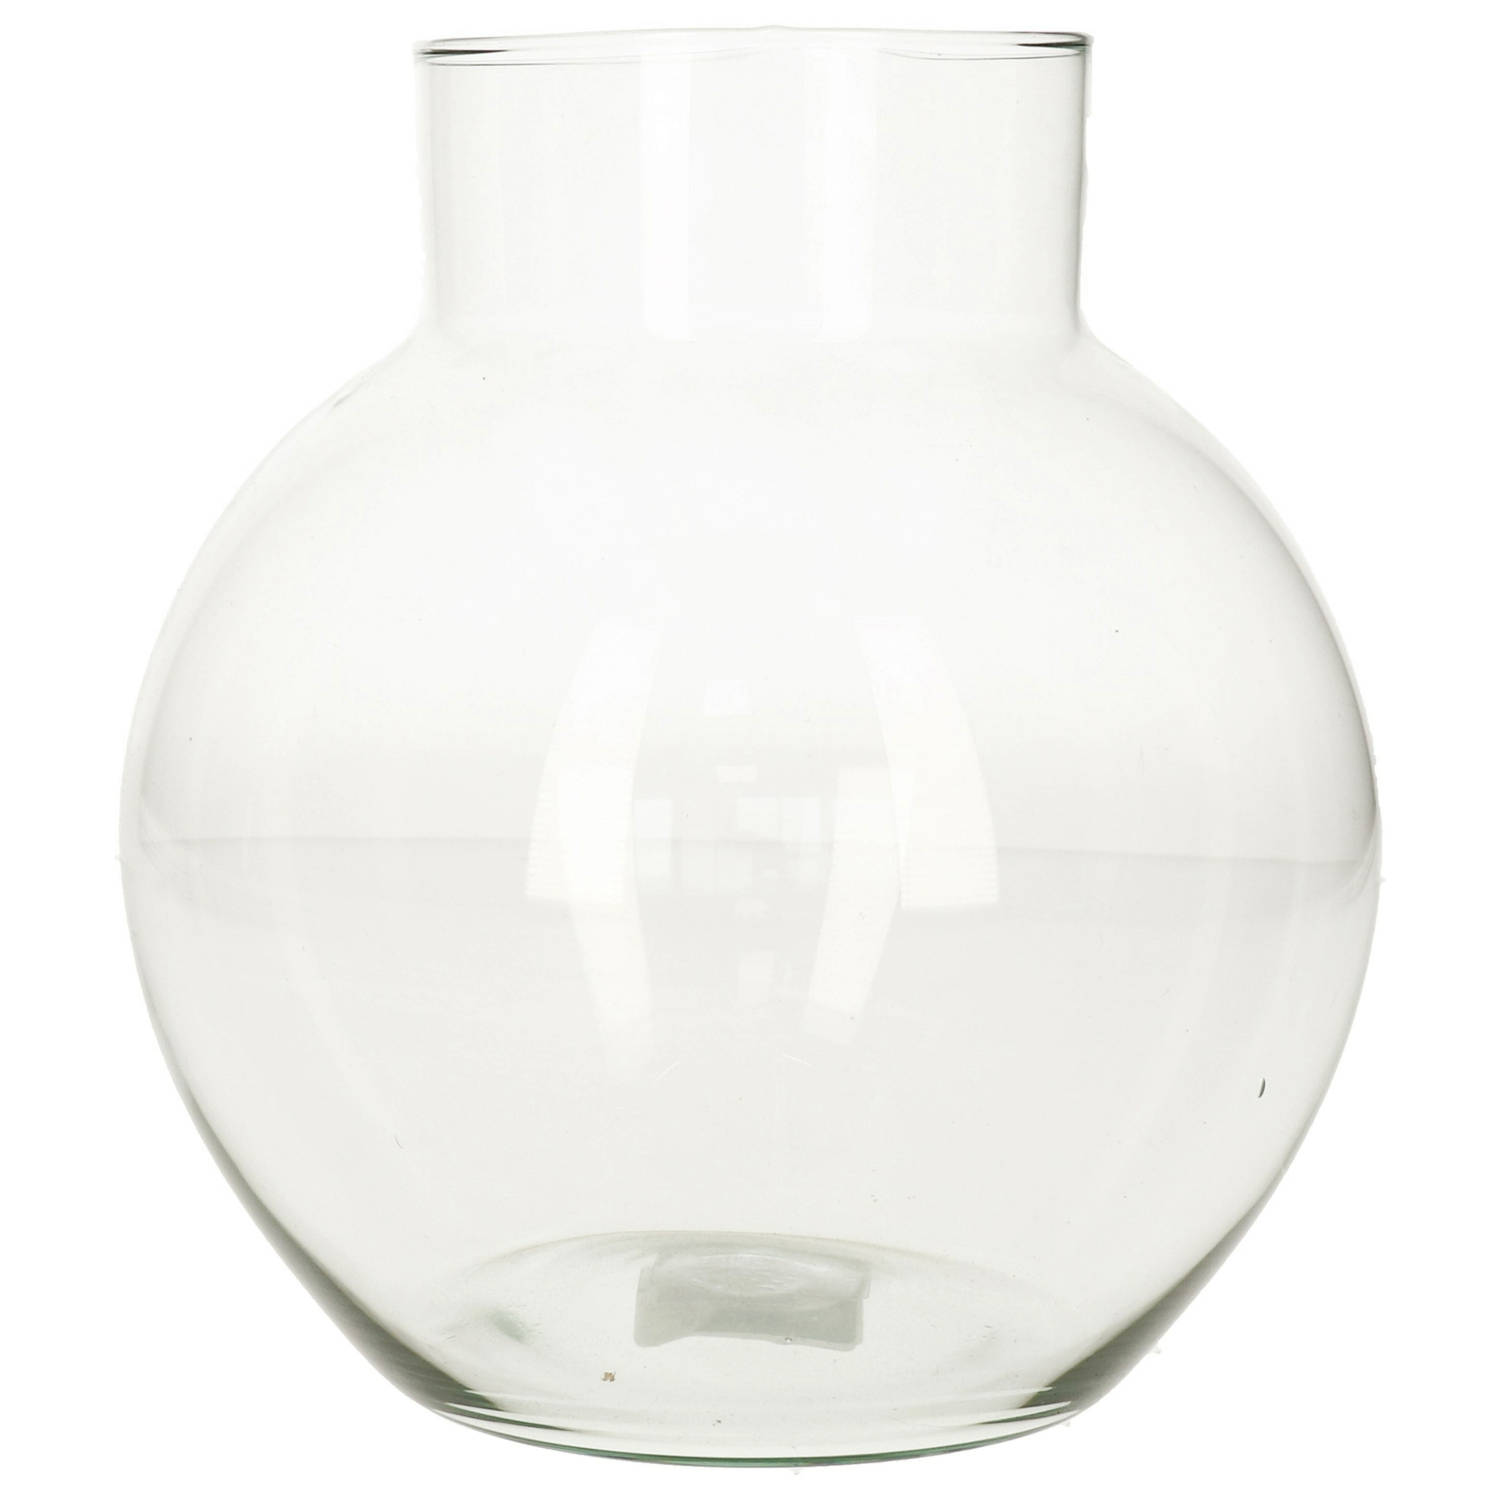 Transparante-bruine Ronde Vissenkom Vaas-vazen Van Glas 20 X 19 Cm Vazen